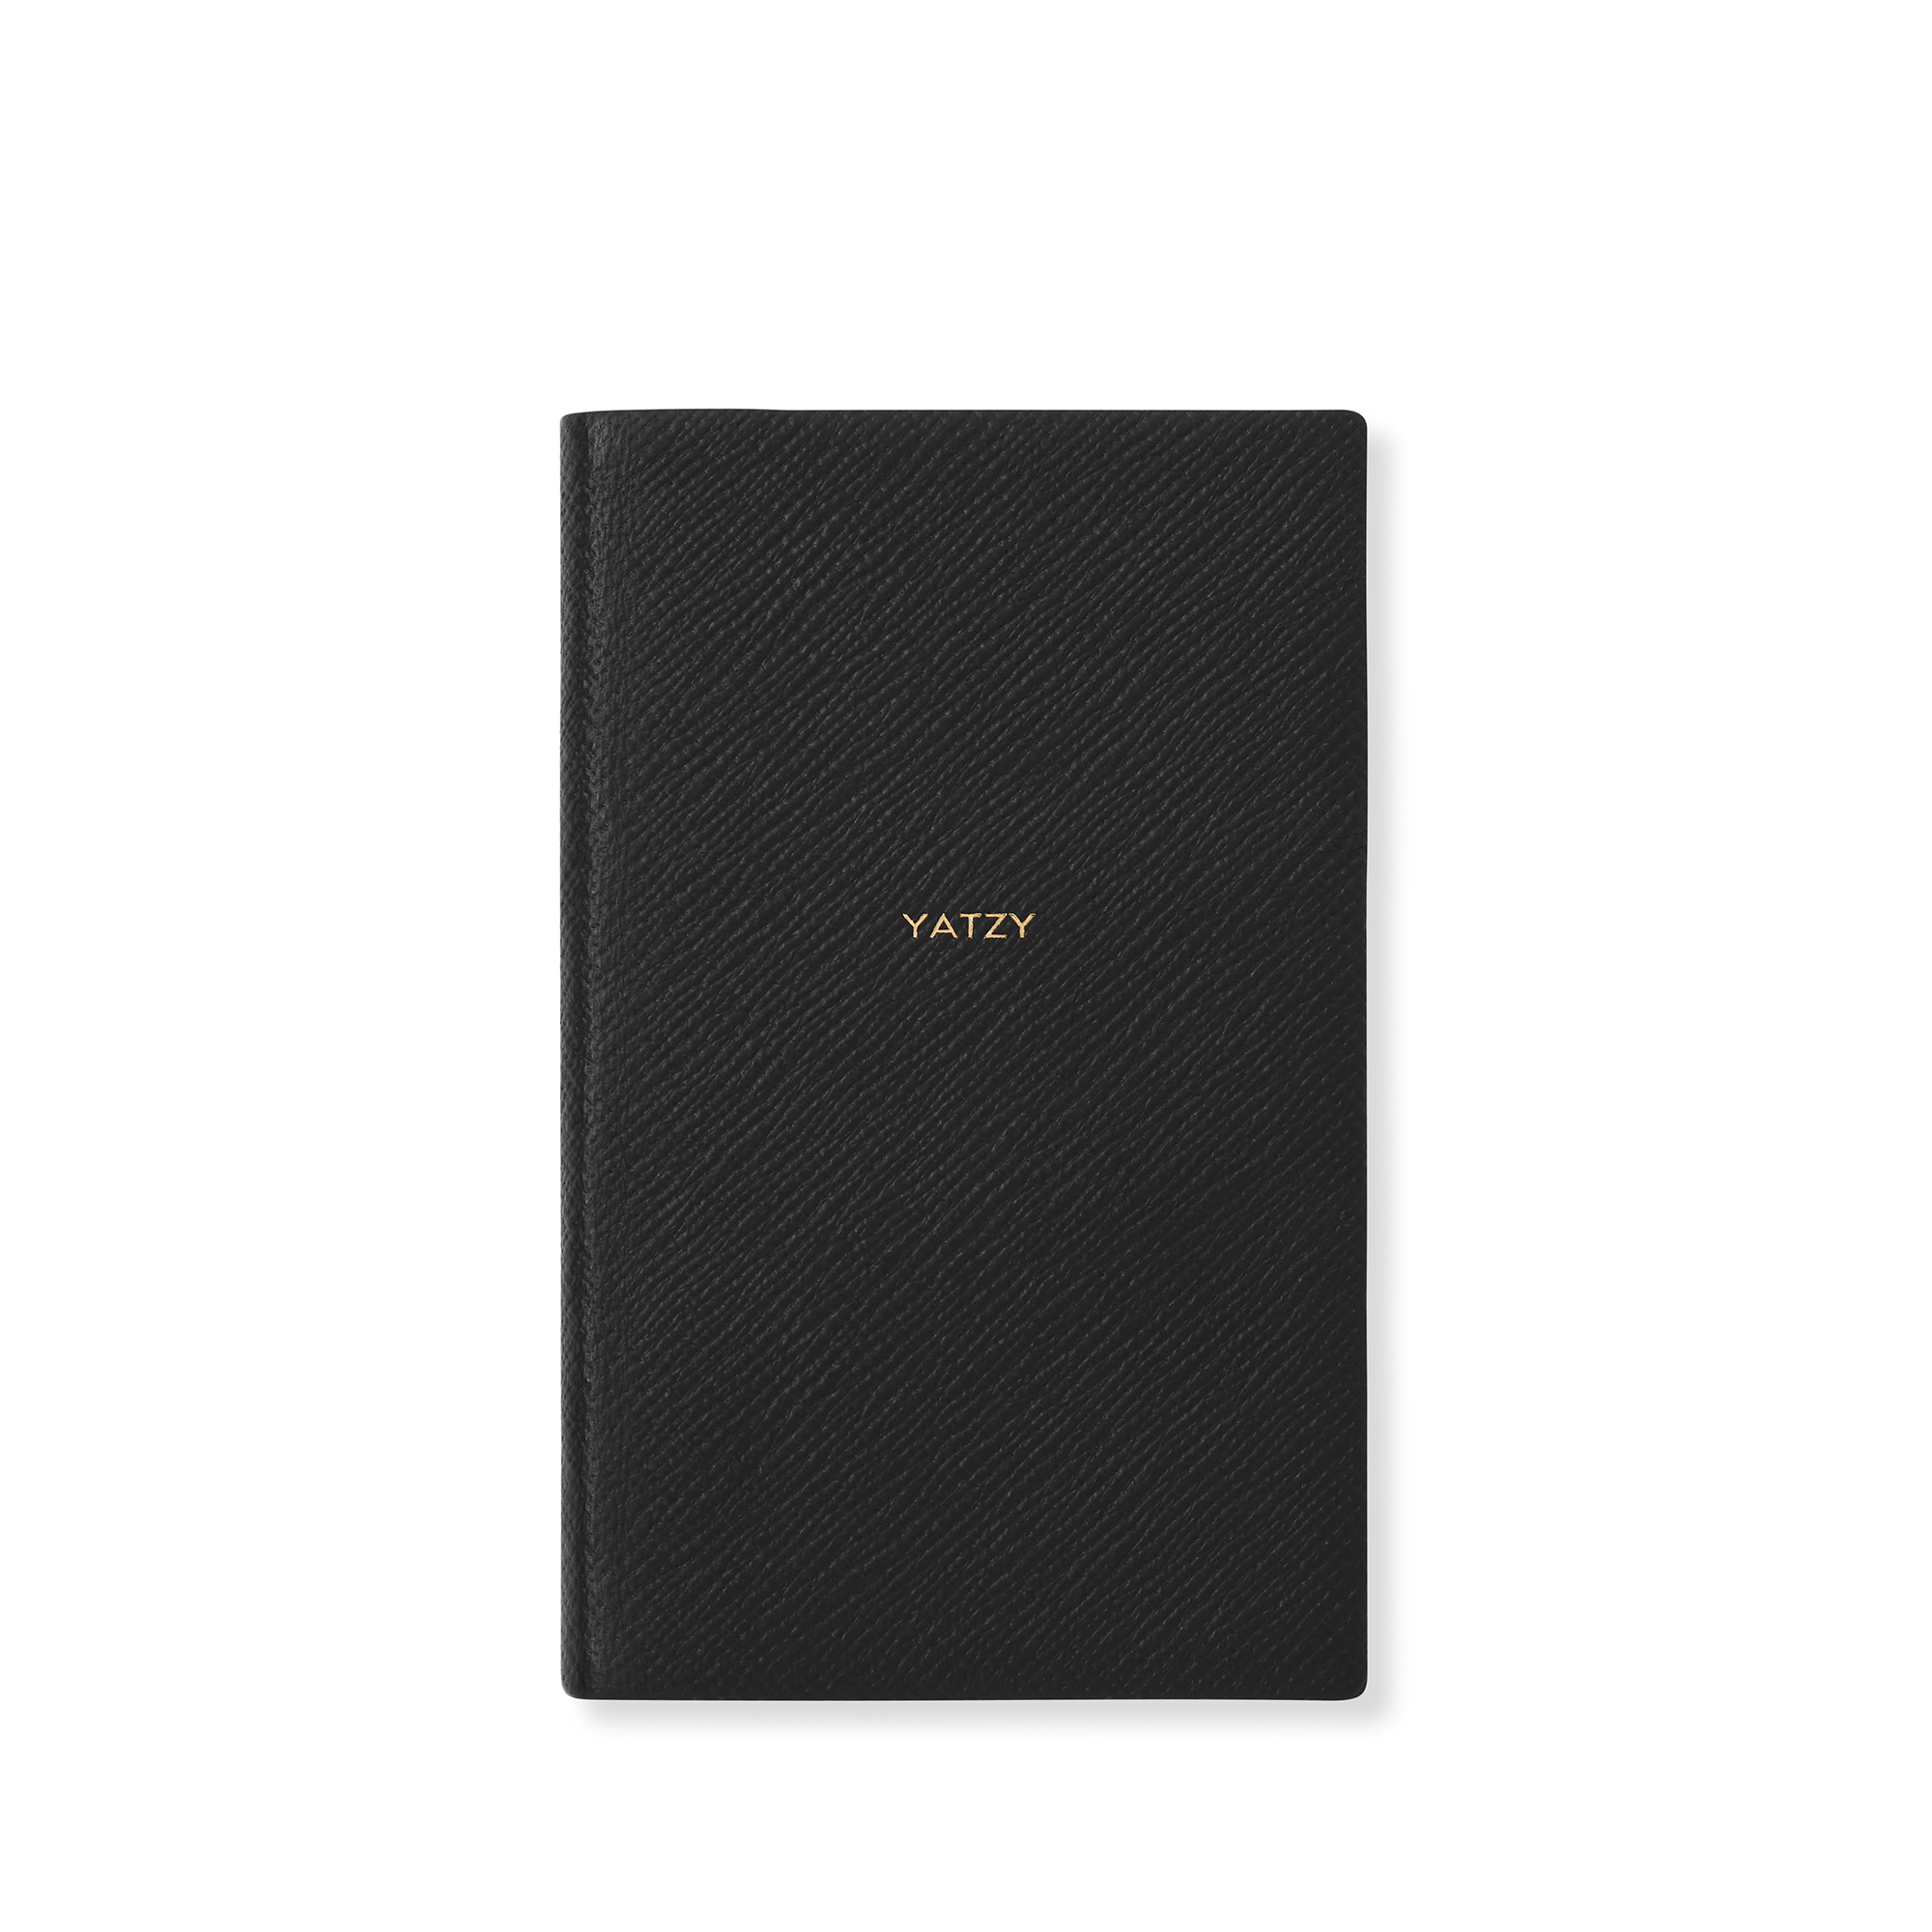 Smythson Yatzy Scorecard Panama Notebook In Black